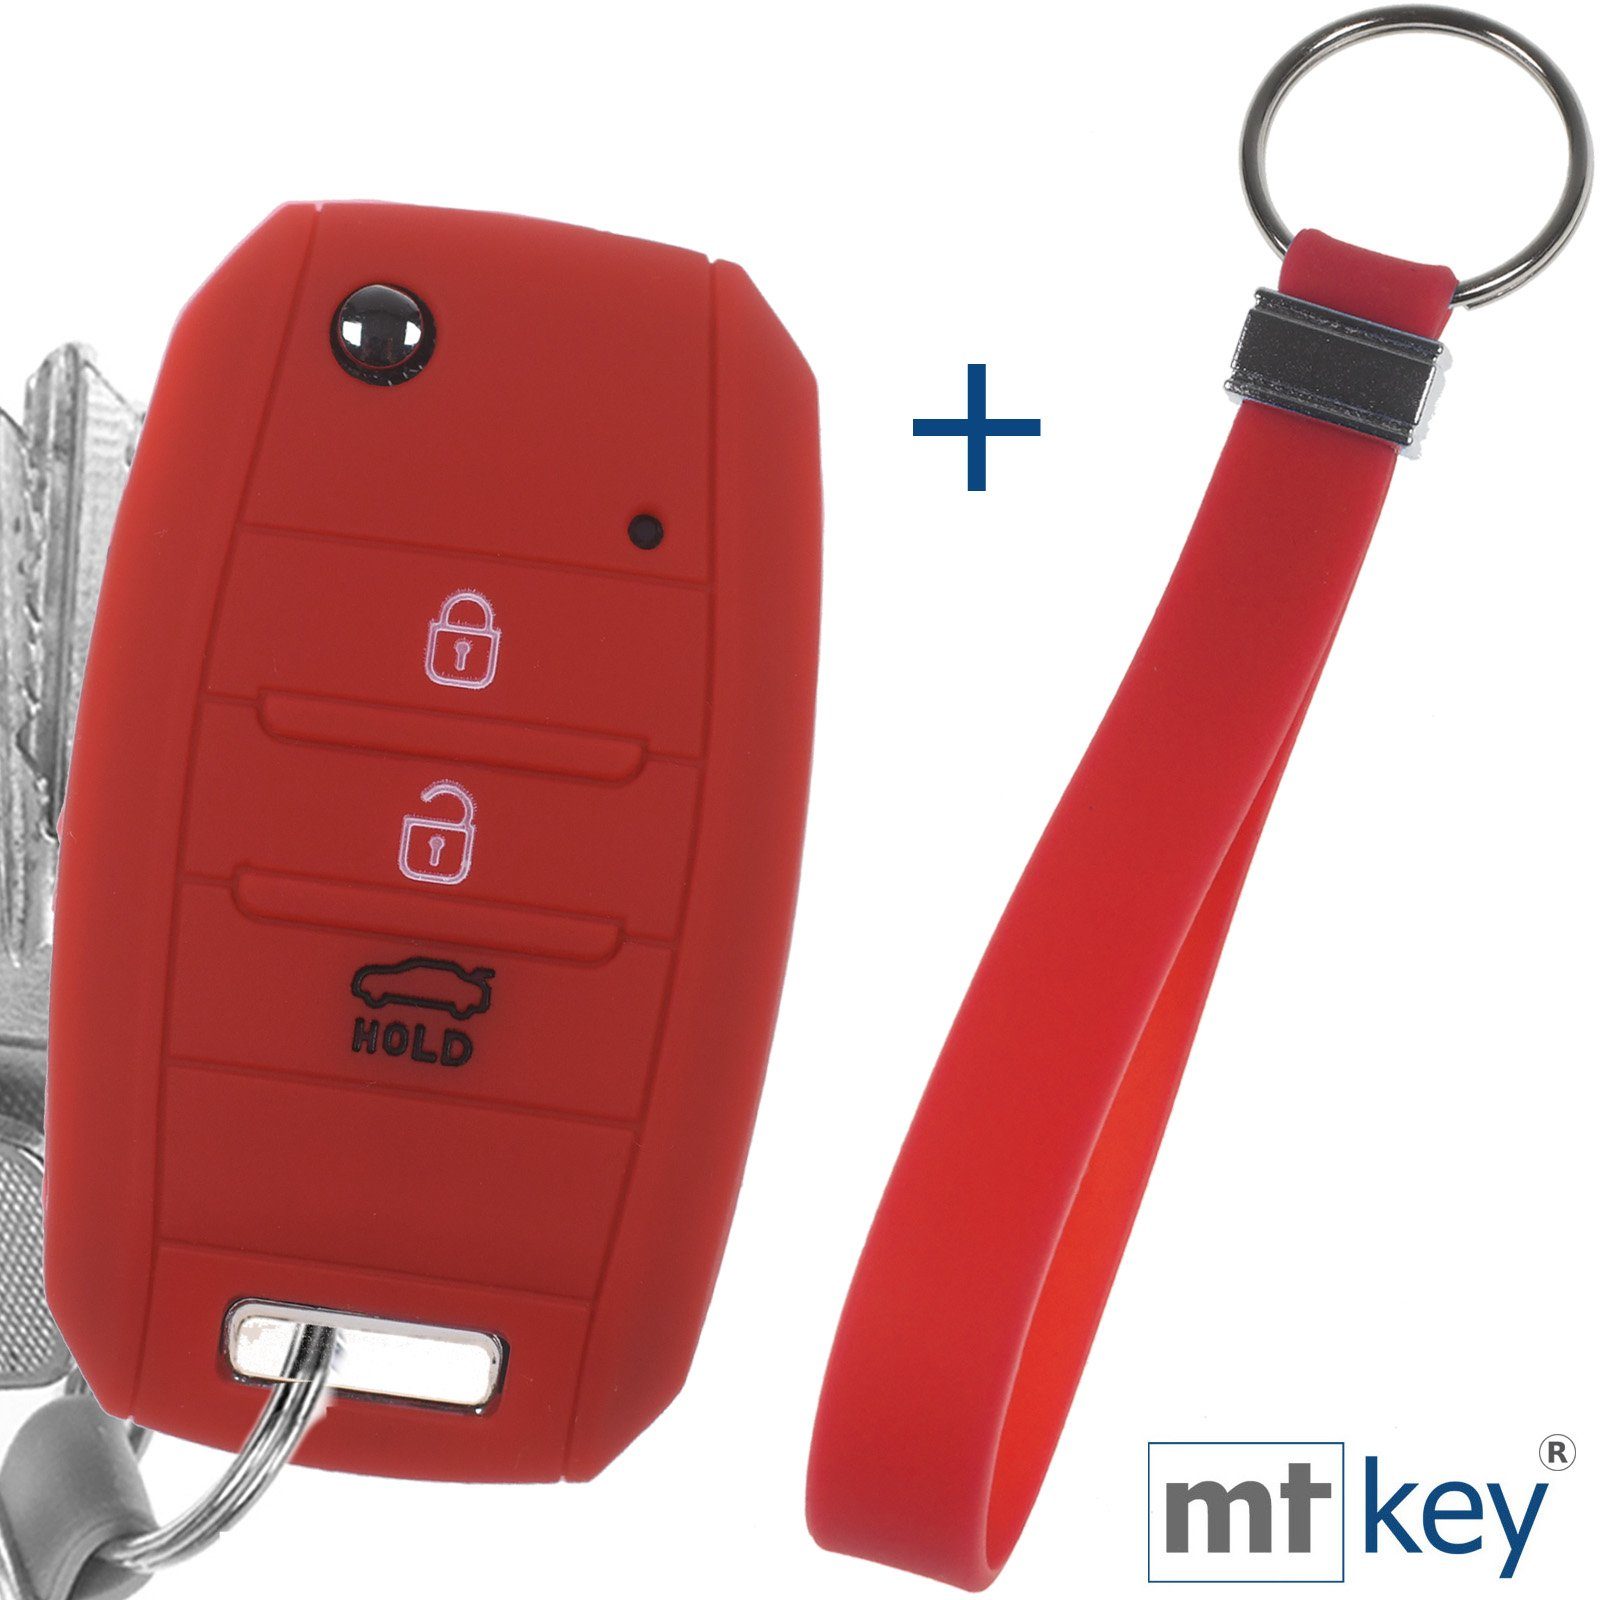 Tasten KIA Ceed Schlüsselband, mit Picantio mt-key Silikon Softcase Carens Stonic 3 Sportage Rot Schlüsseltasche Rio Autoschlüssel Schutzhülle für Soul